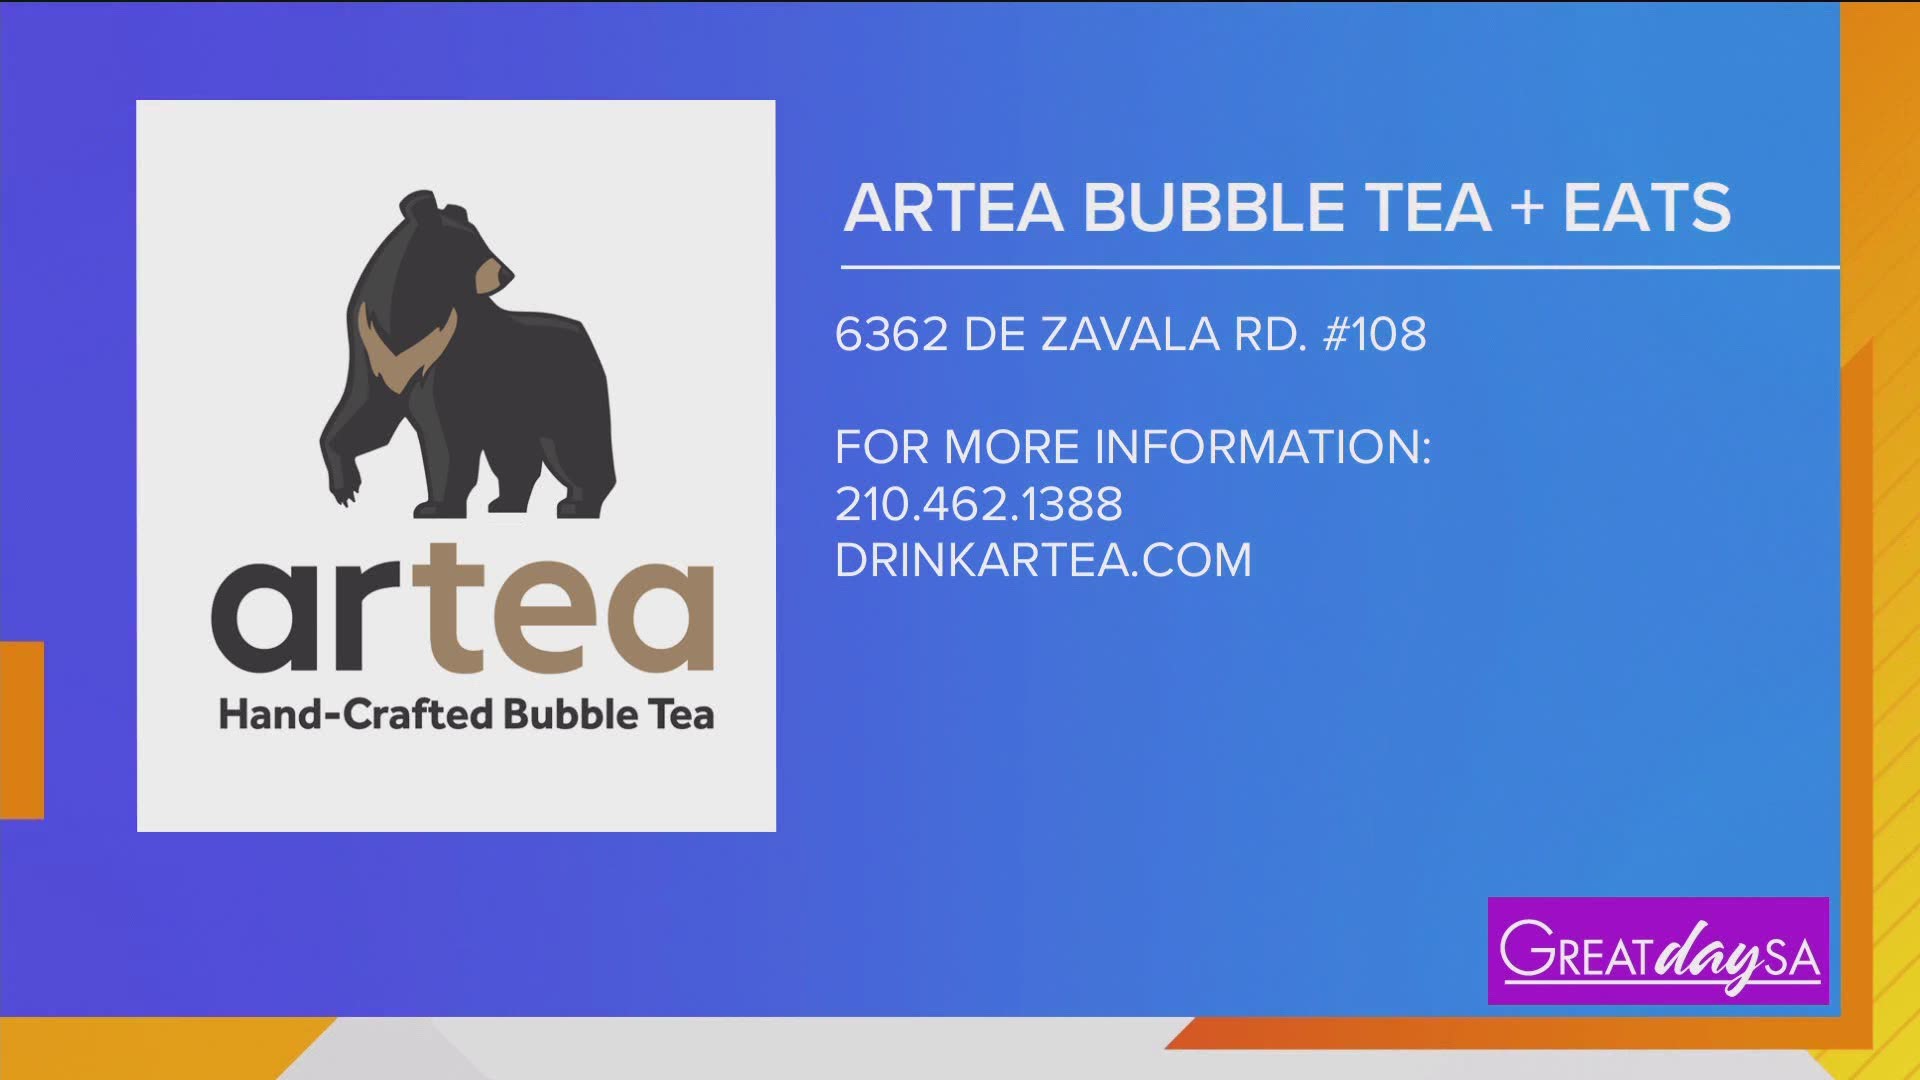 Artea has made ordering your favorite bubble tea a lot easier.